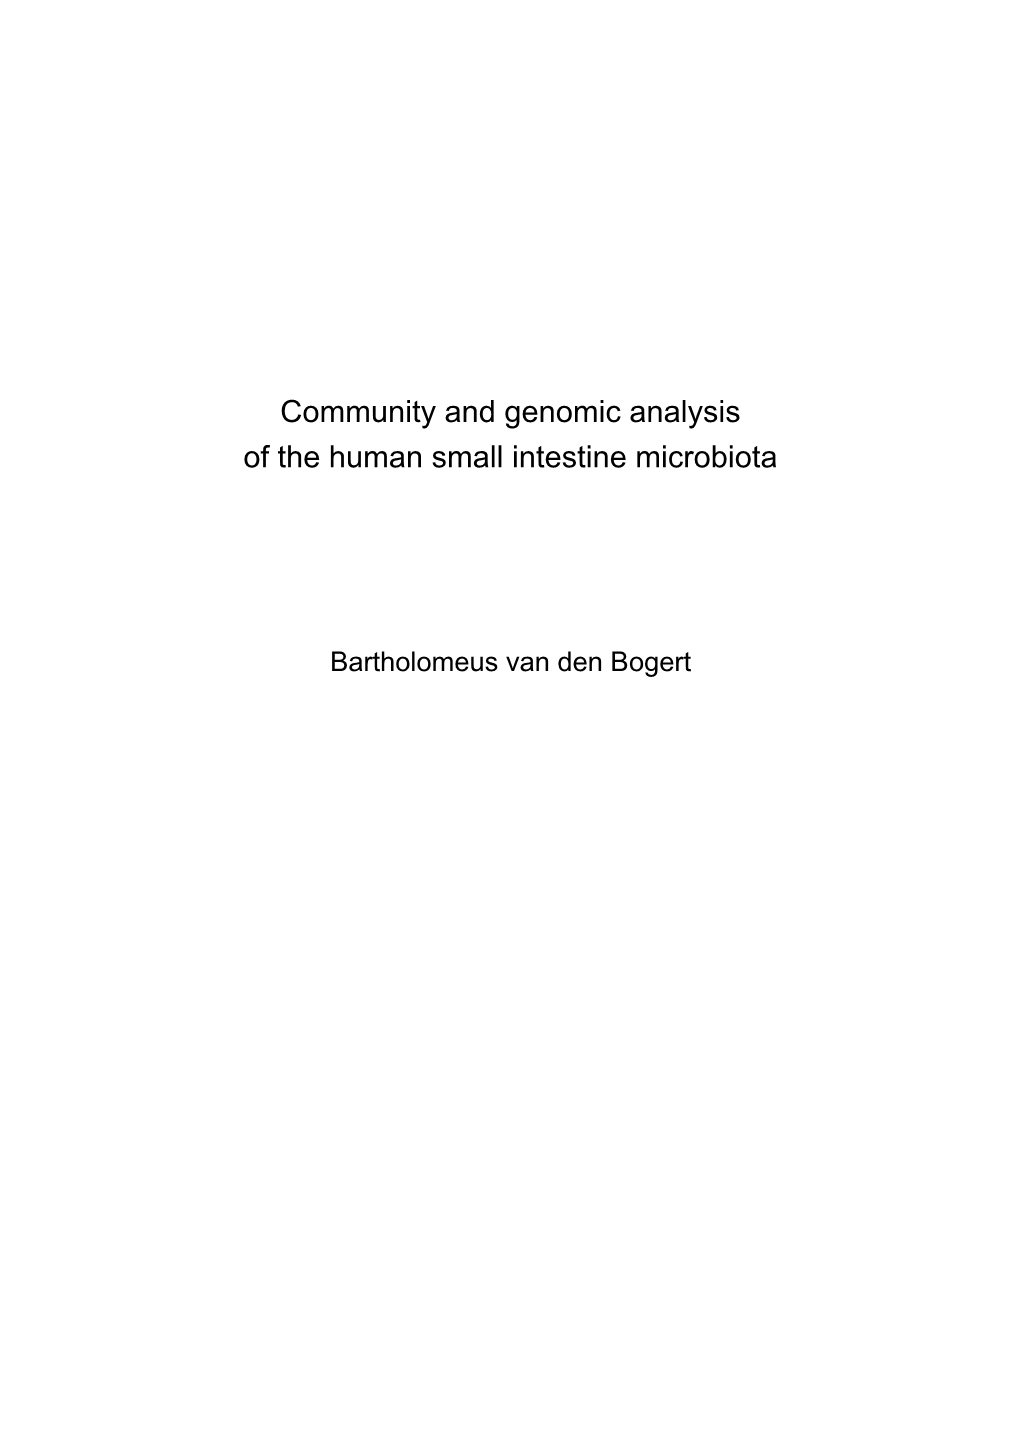 Community and Genomic Analysis of the Human Small Intestine Microbiota